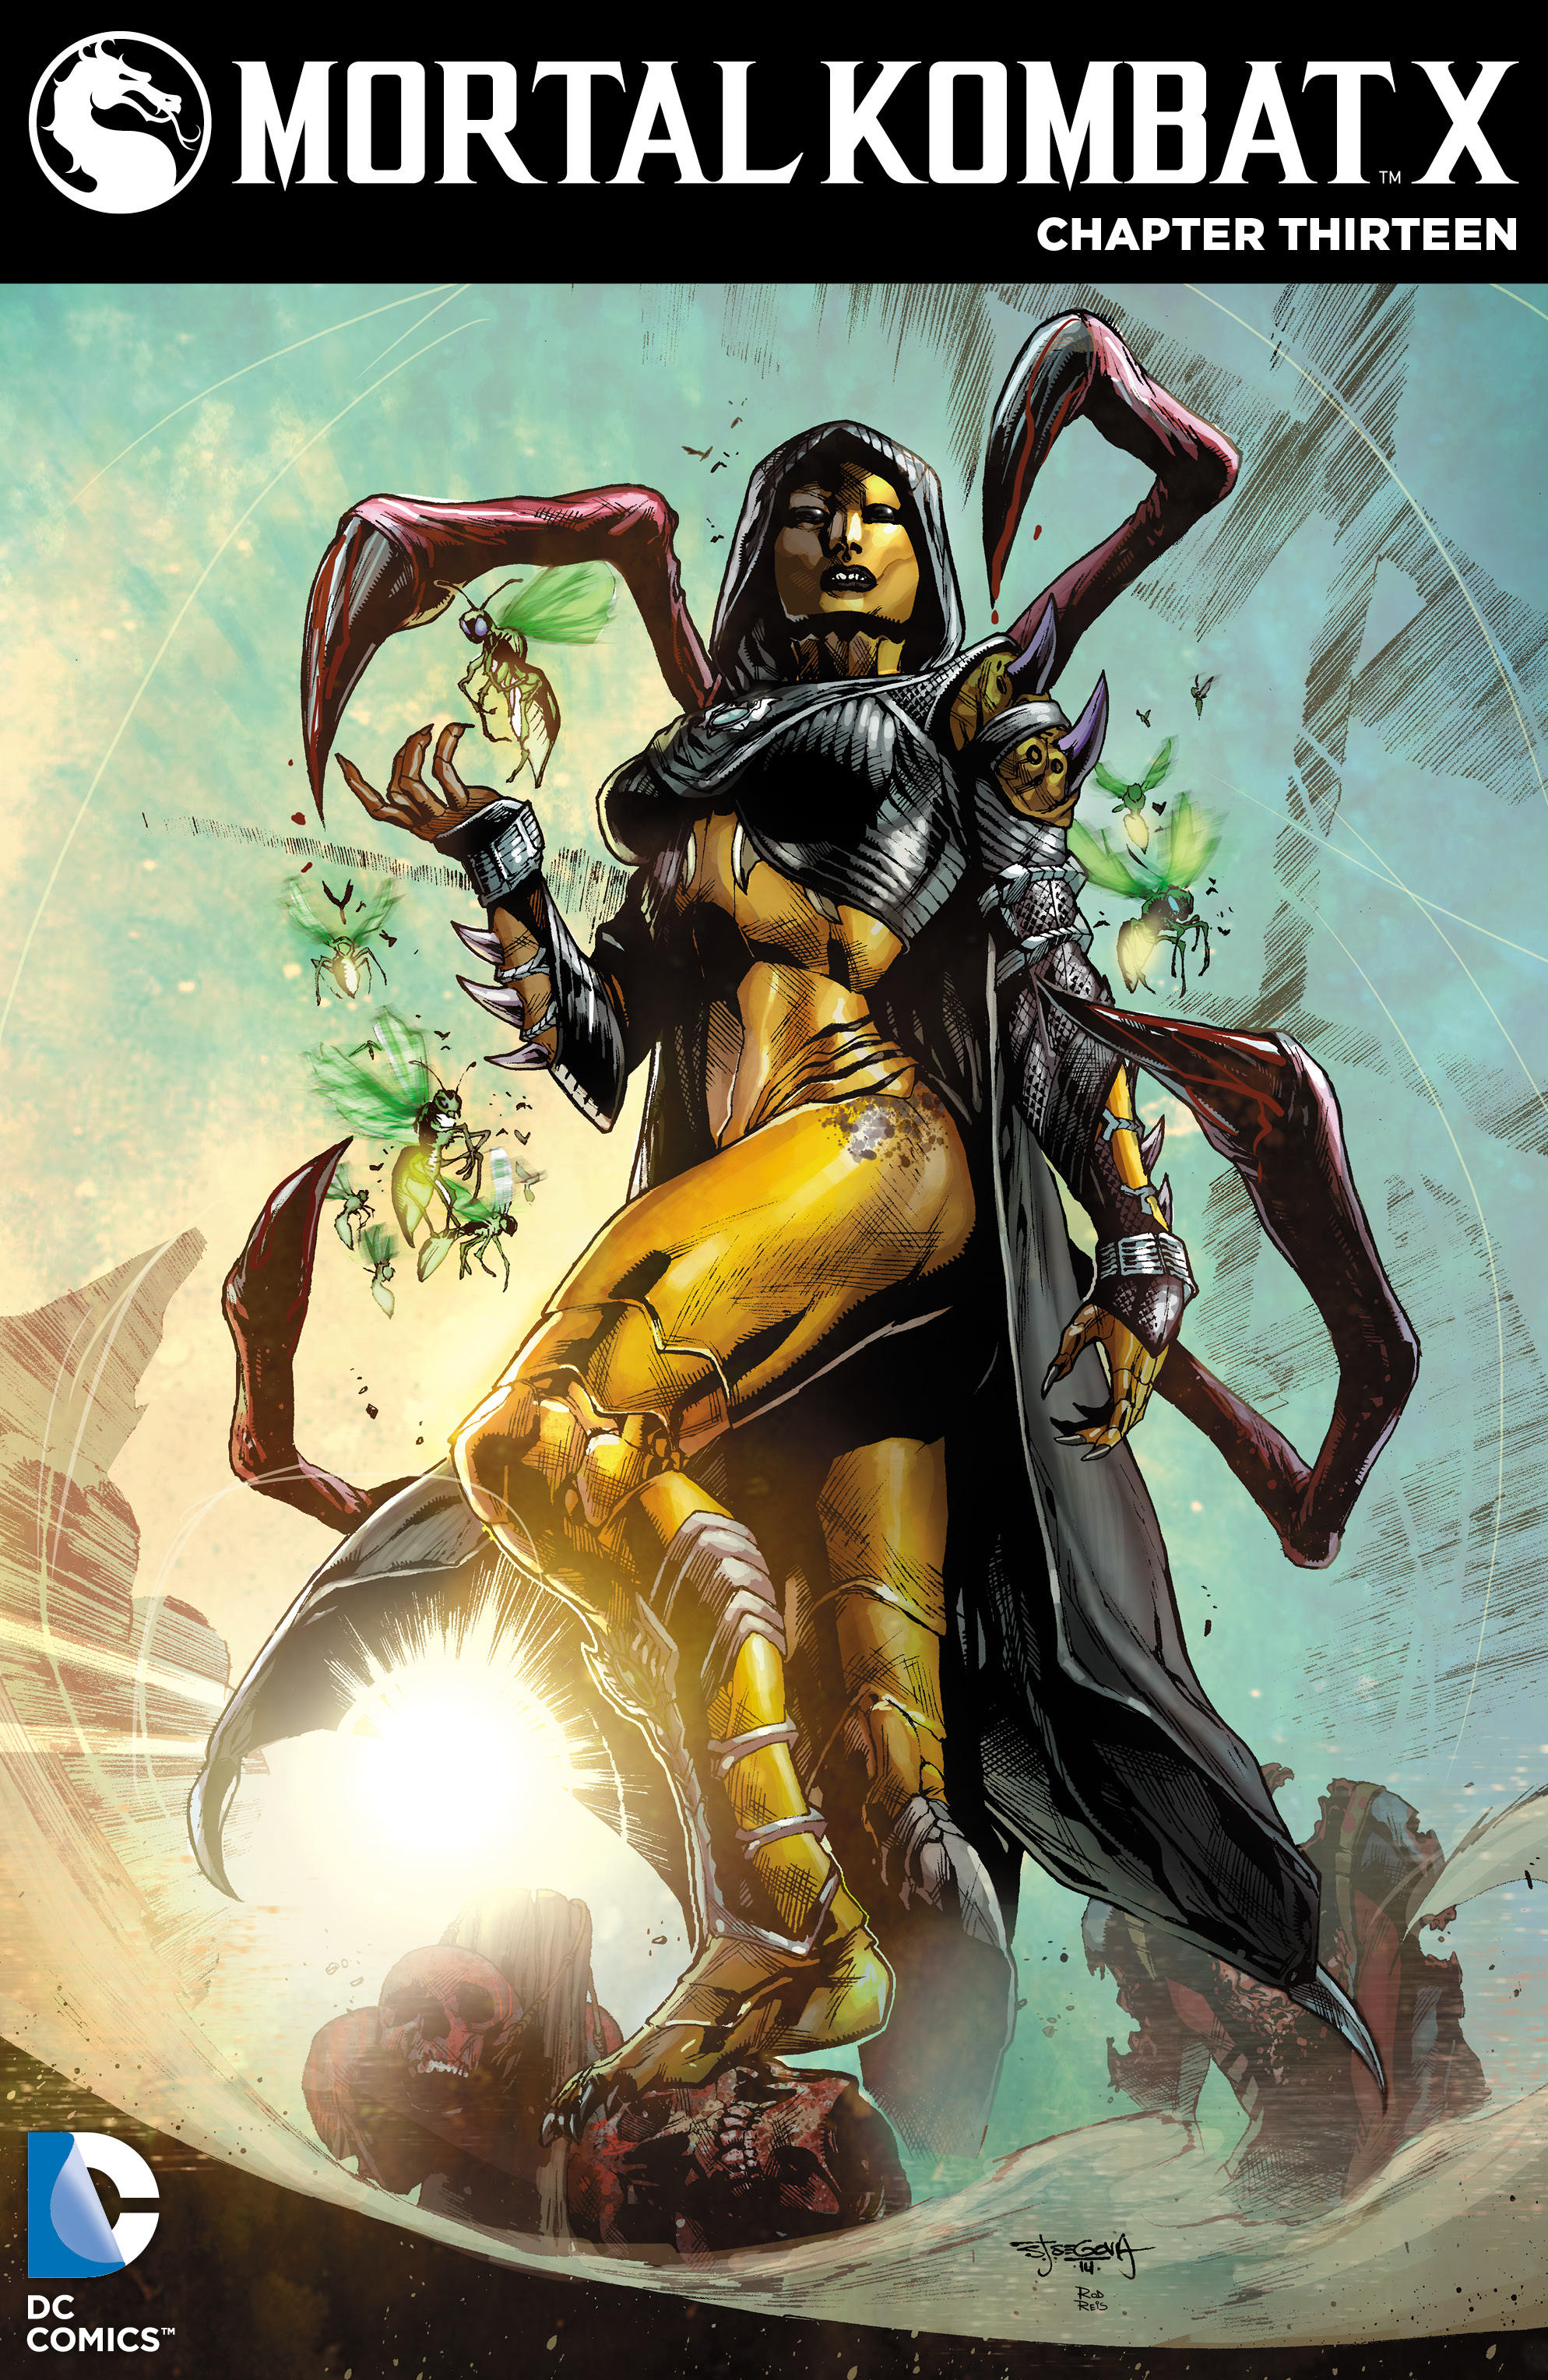 Mortal Kombat X #13 preview images